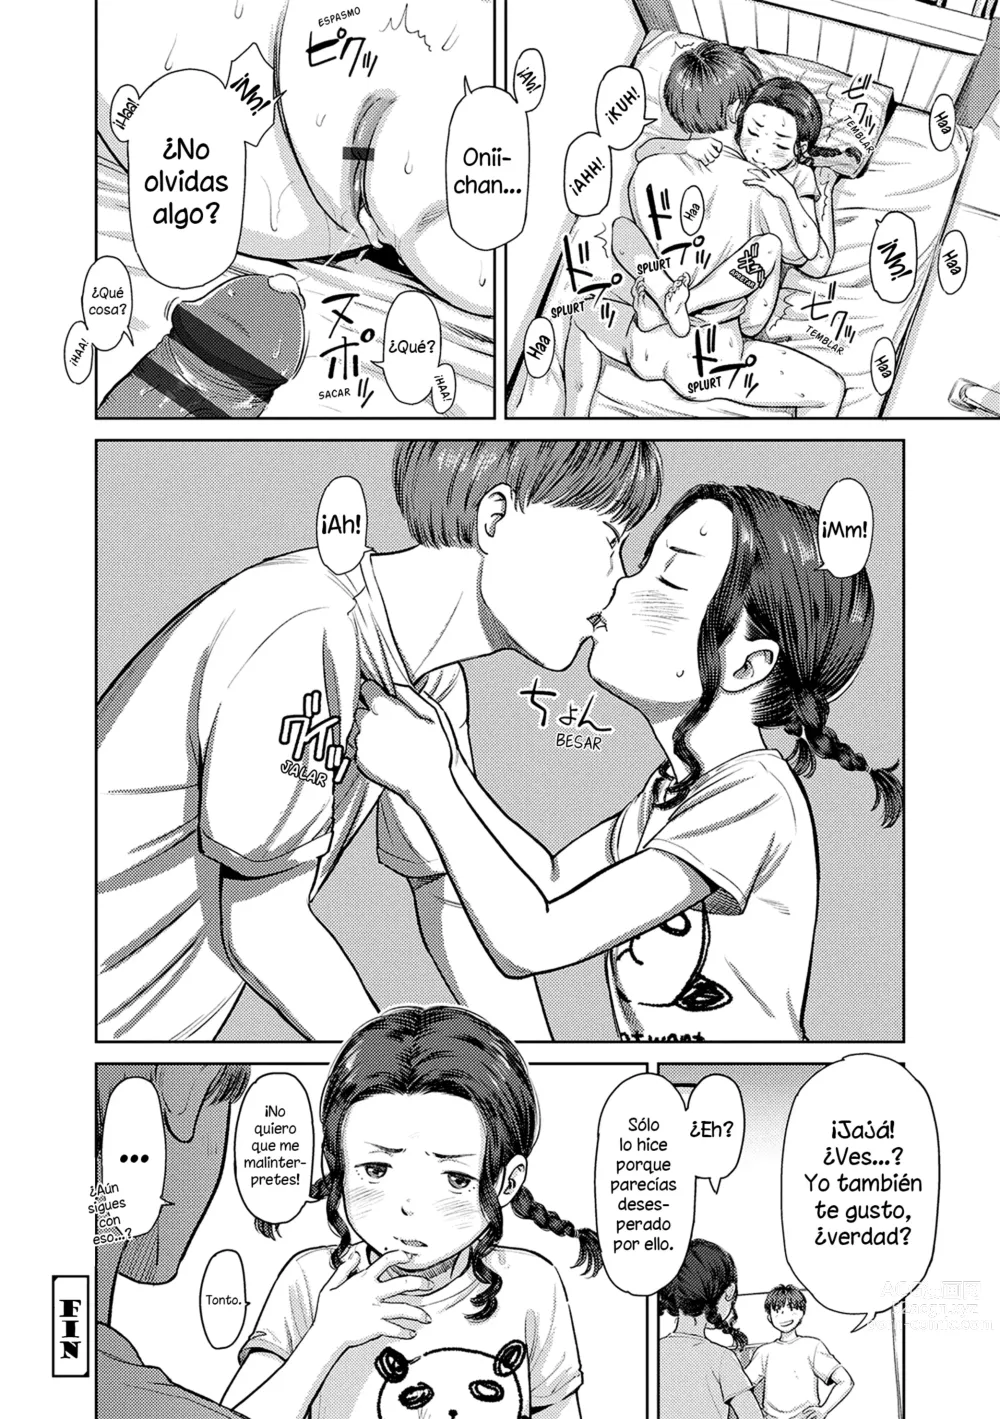 Page 30 of manga Bienvenido a casa